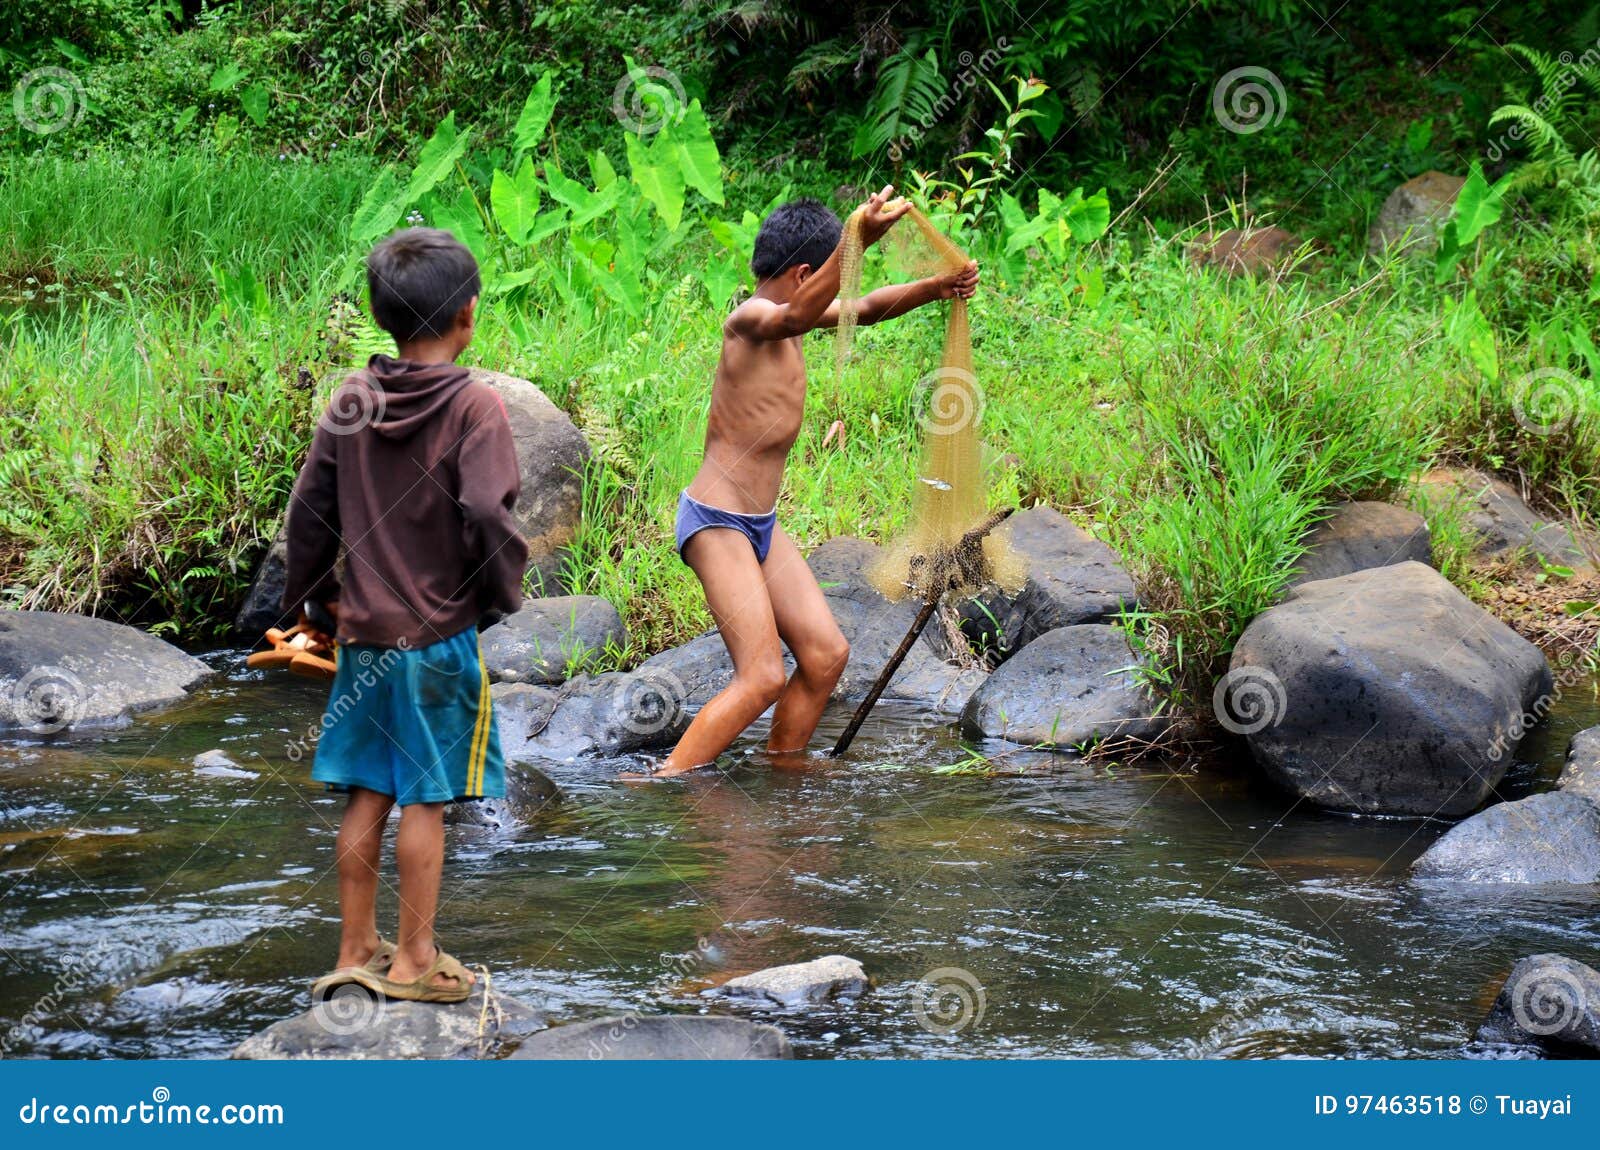 Laotian Children Fisher Using Fishing Net Catch Fish in Stream Editorial  Stock Photo - Image of life, children: 97463518